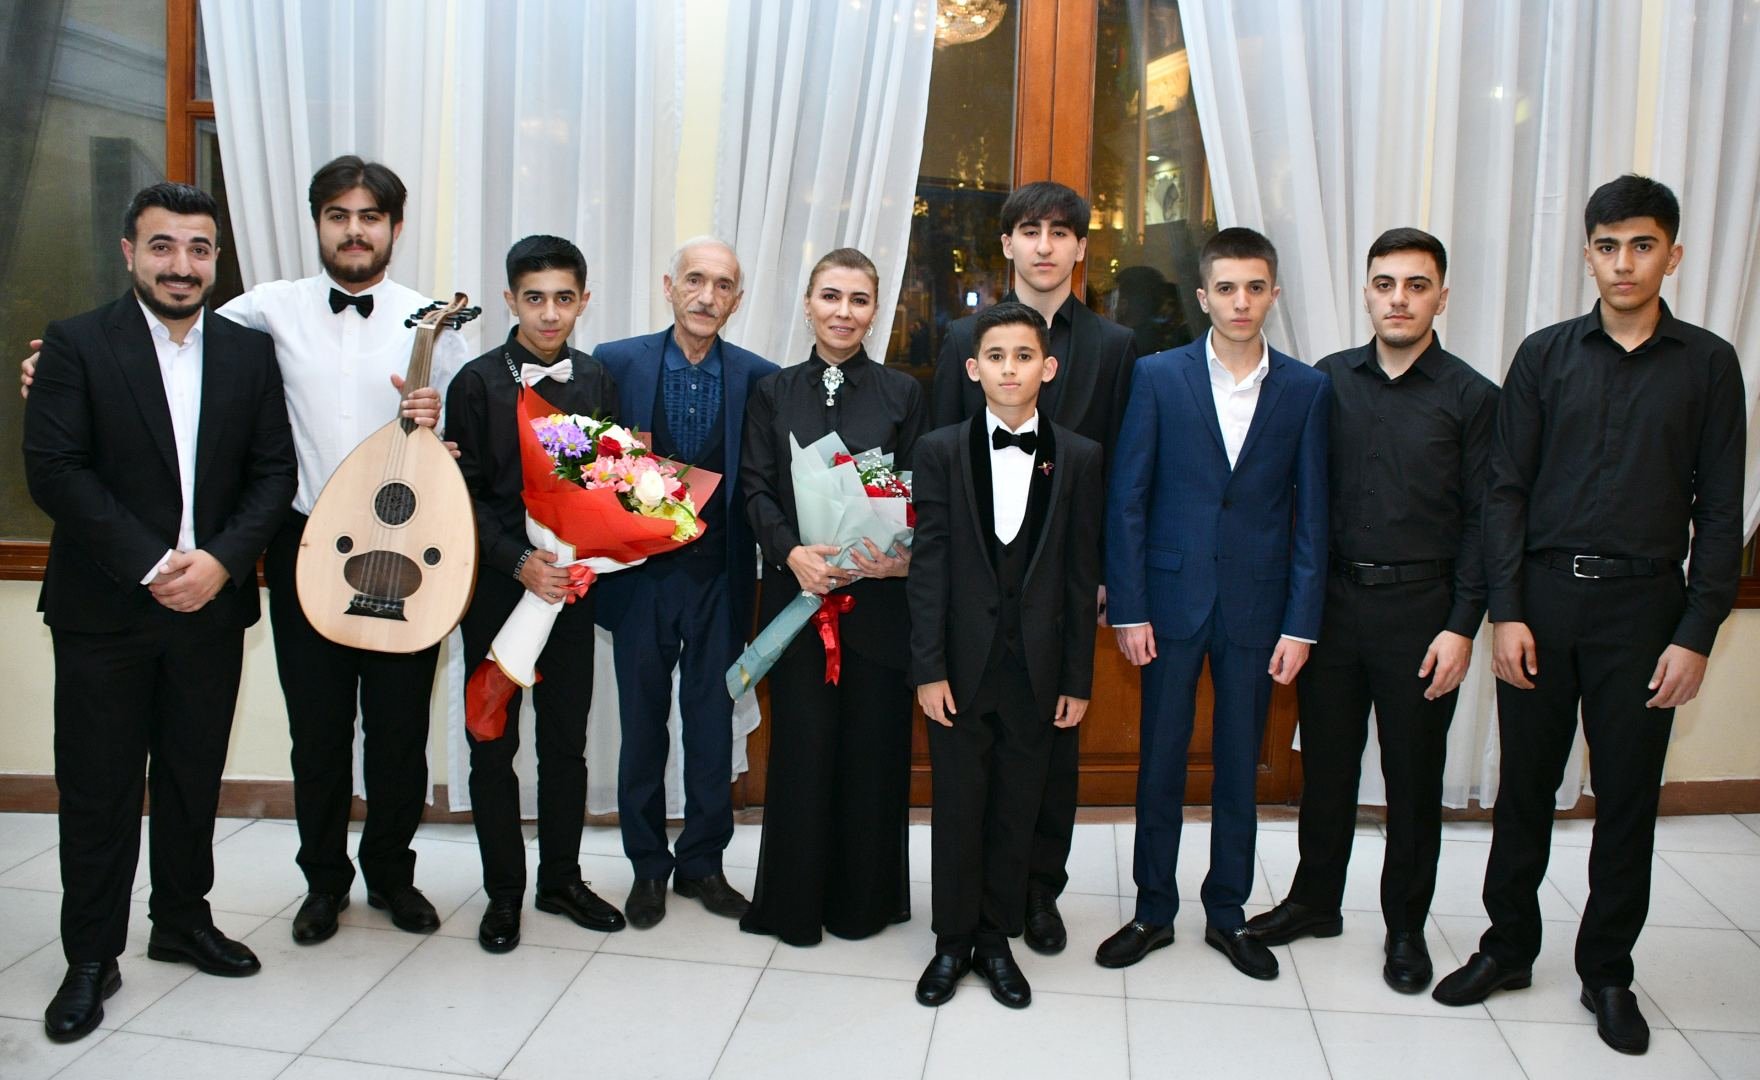 В рамках проекта "Gənclərə dəstək" представлены произведения азербайджанских композиторов